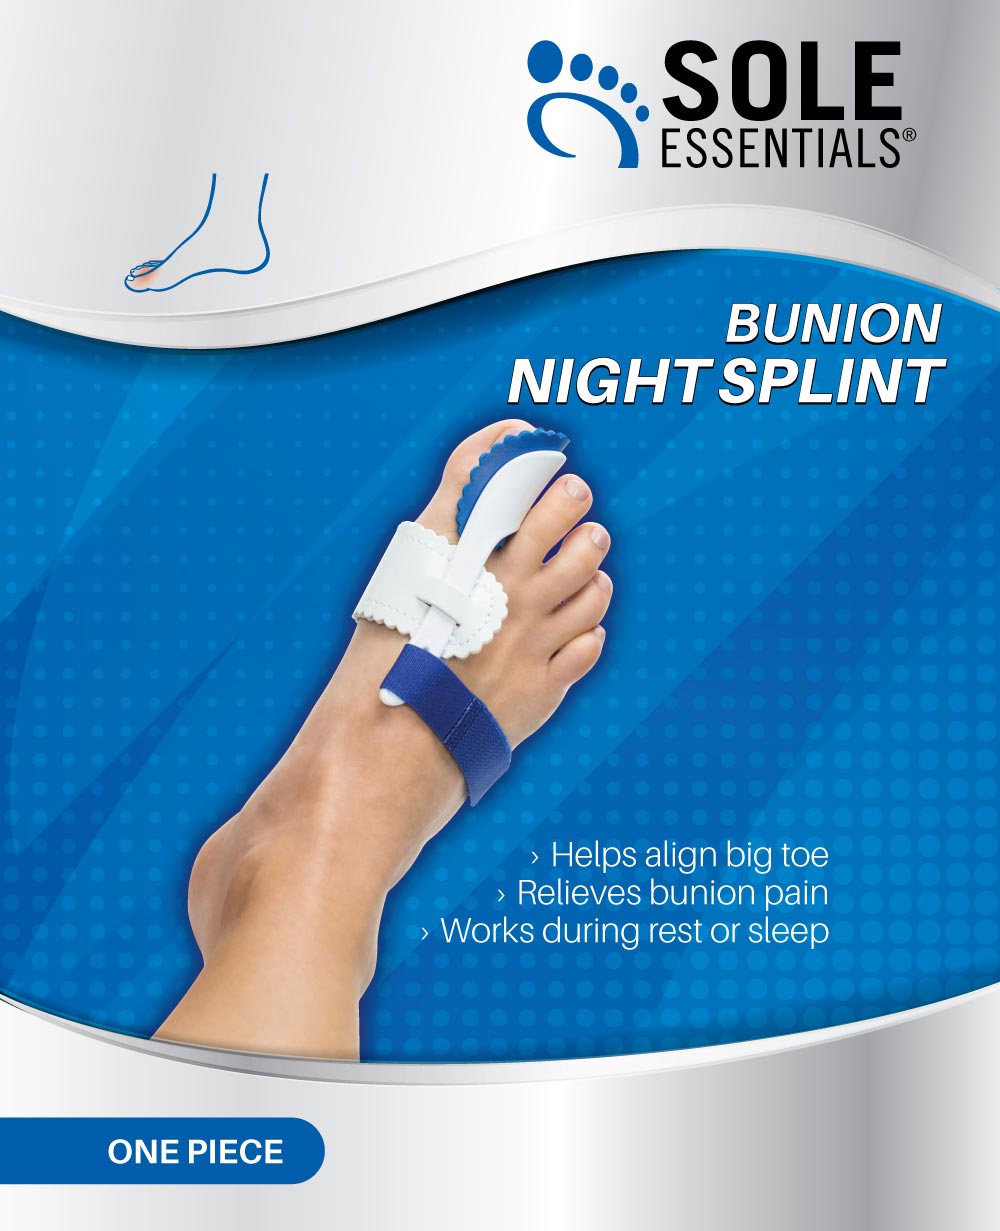 Sole Essentials Bunion Night Splint